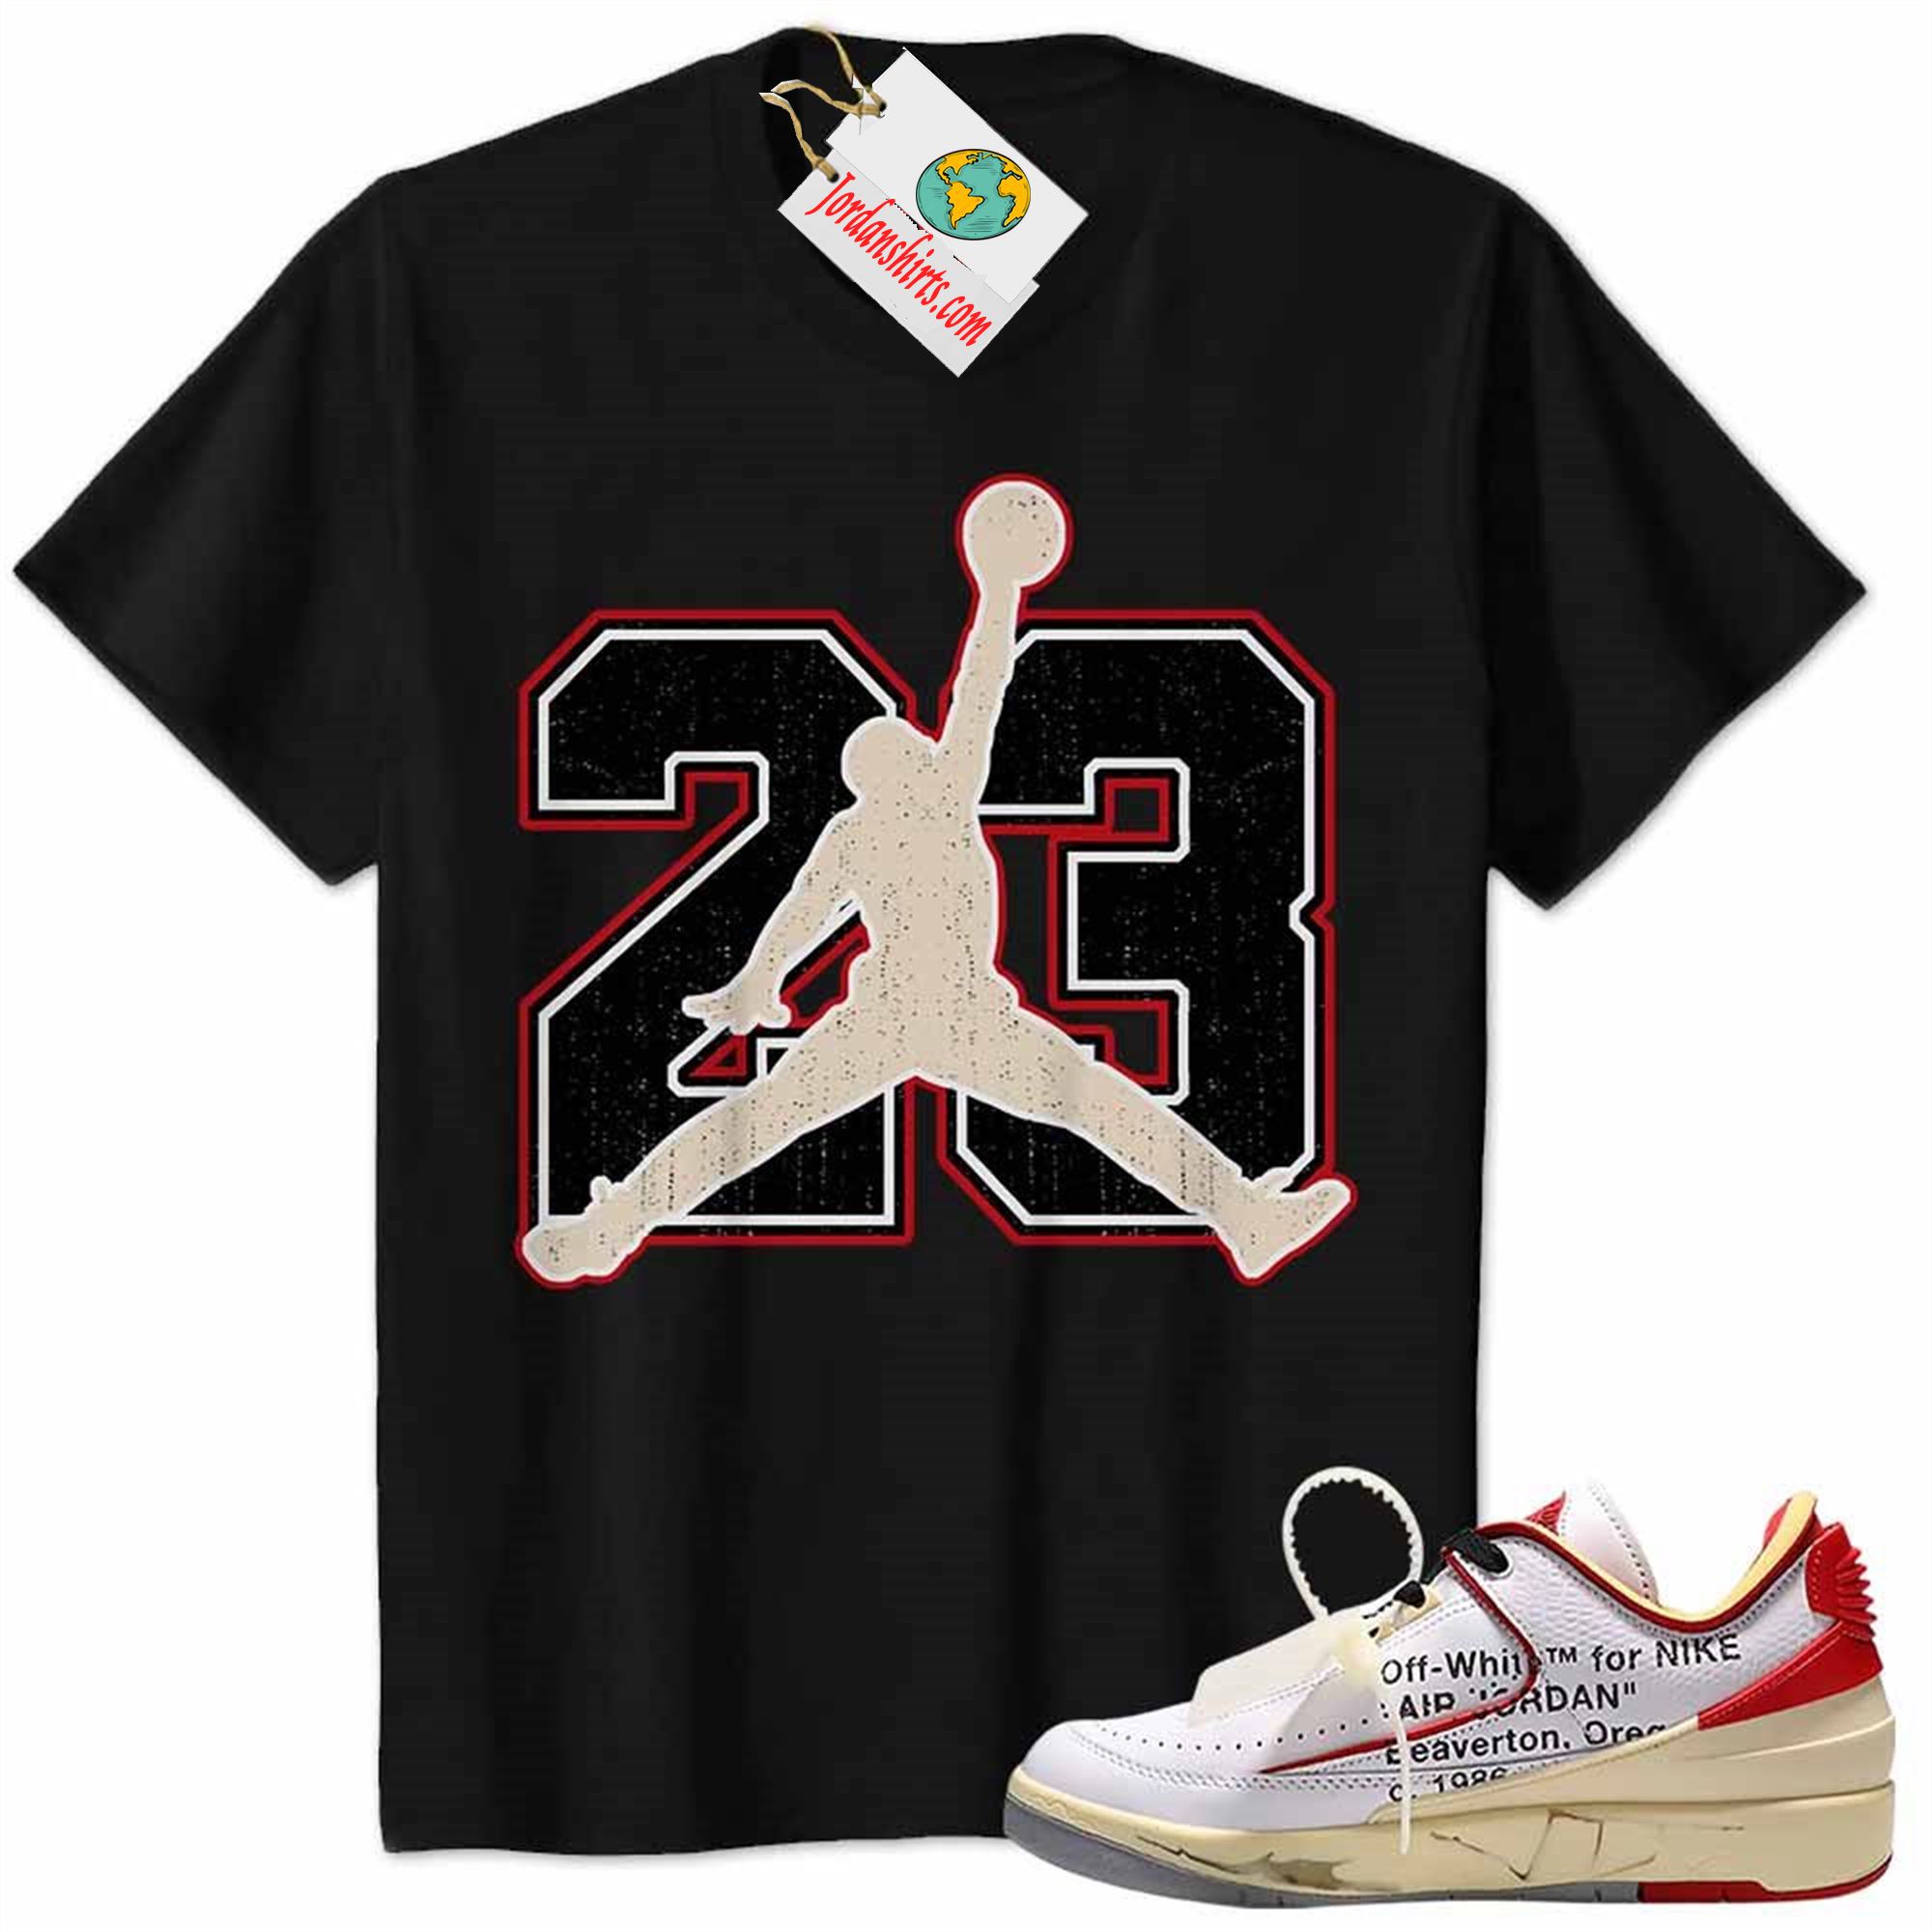 Jordan 2 Shirt, Jordan 2 Low White Red Off-white Shirt Jumpman No23 Black Plus Size Up To 5xl